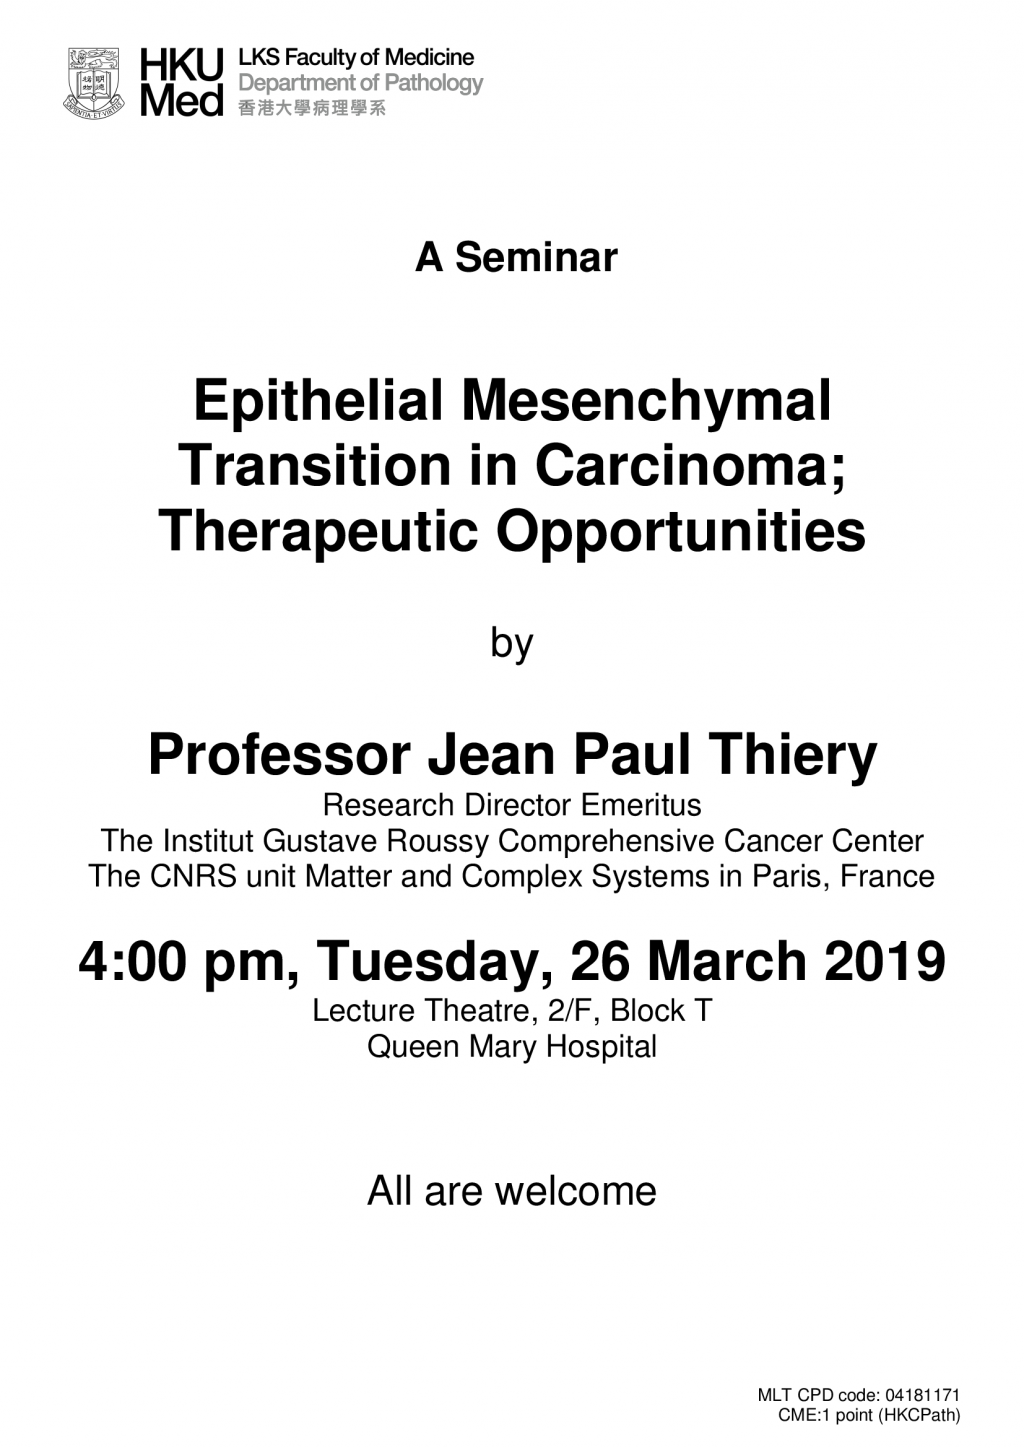 A seminar by Professor Jean Paul Thiery on 26 March 2019